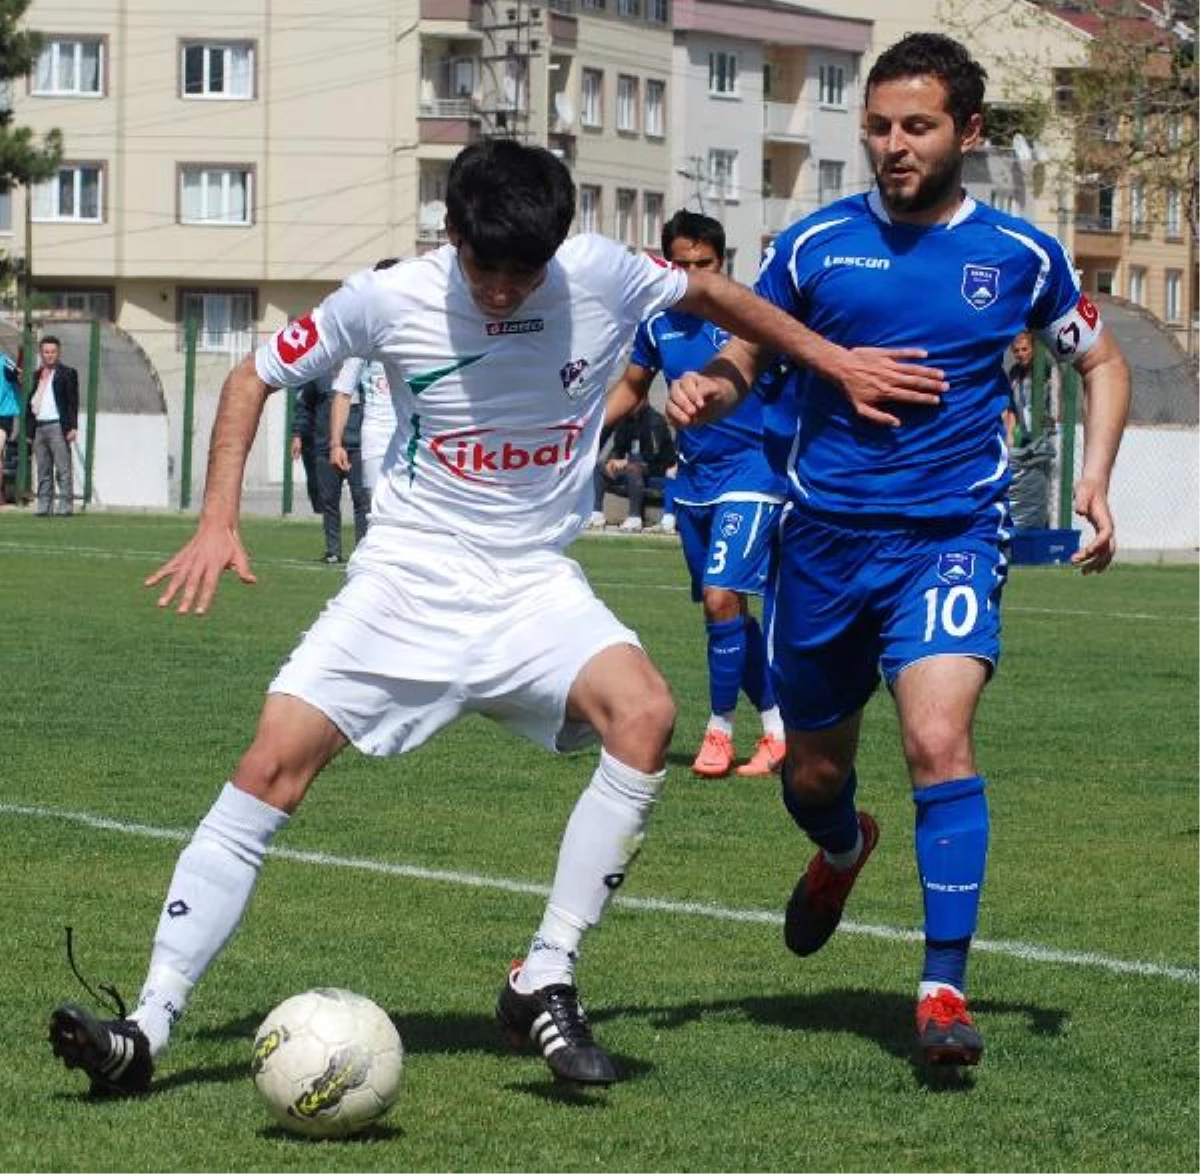 Bursa Nilüferspor - Afyonkarahisarspor: 3-0